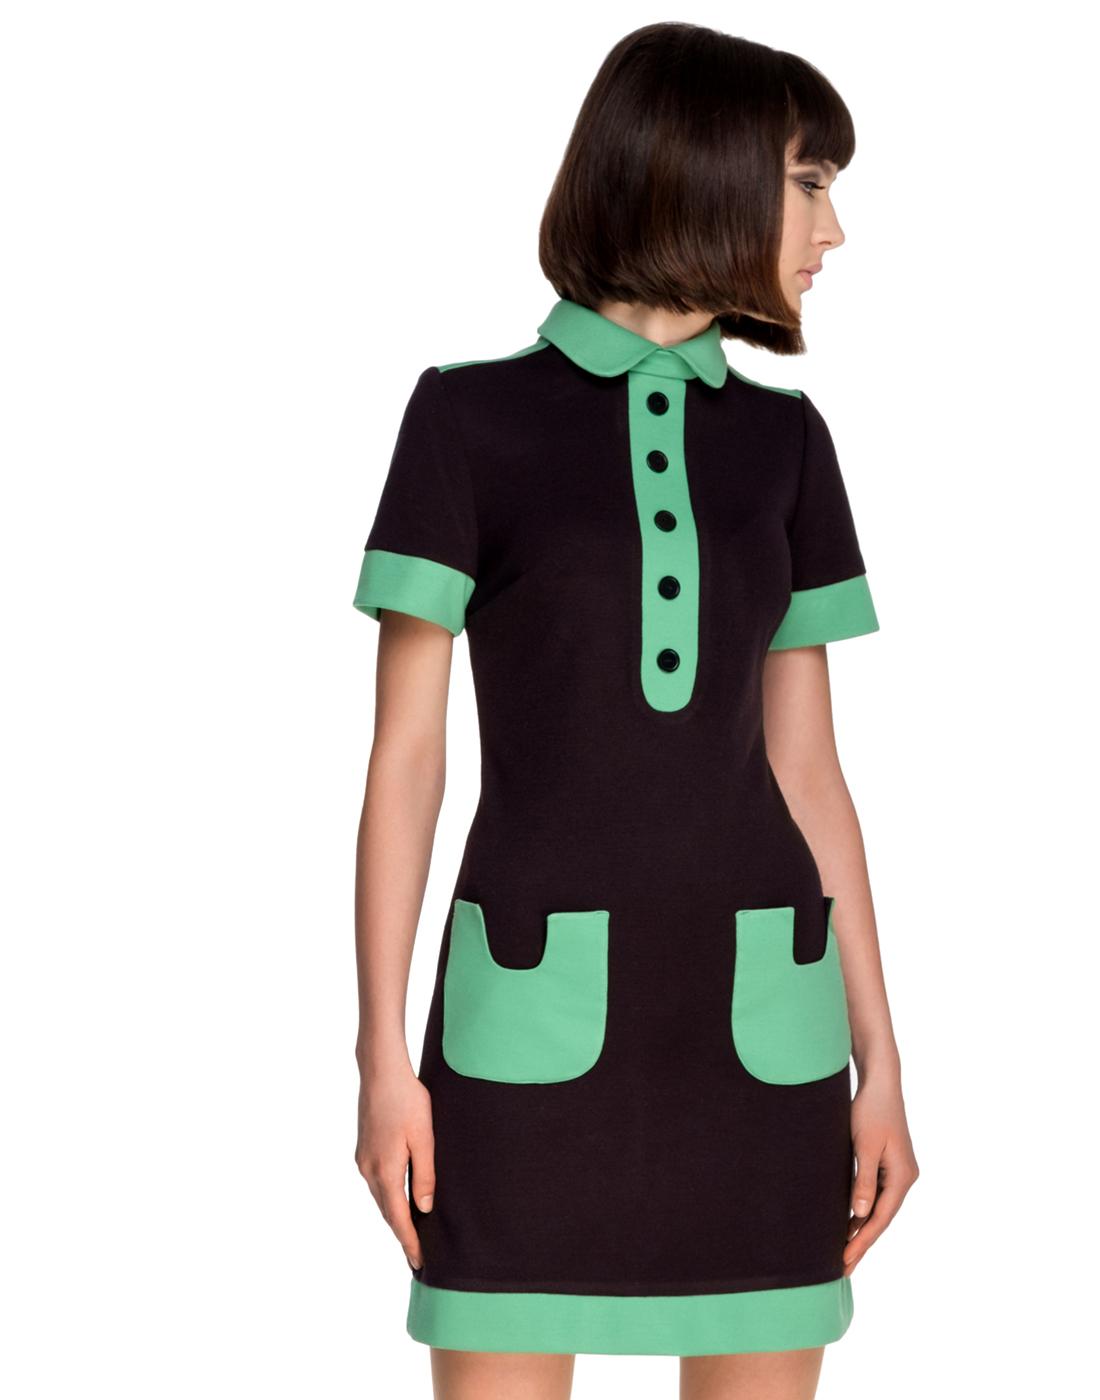 MARMALADE 1960s Mod Contrast Pocket Polo Dress B/G